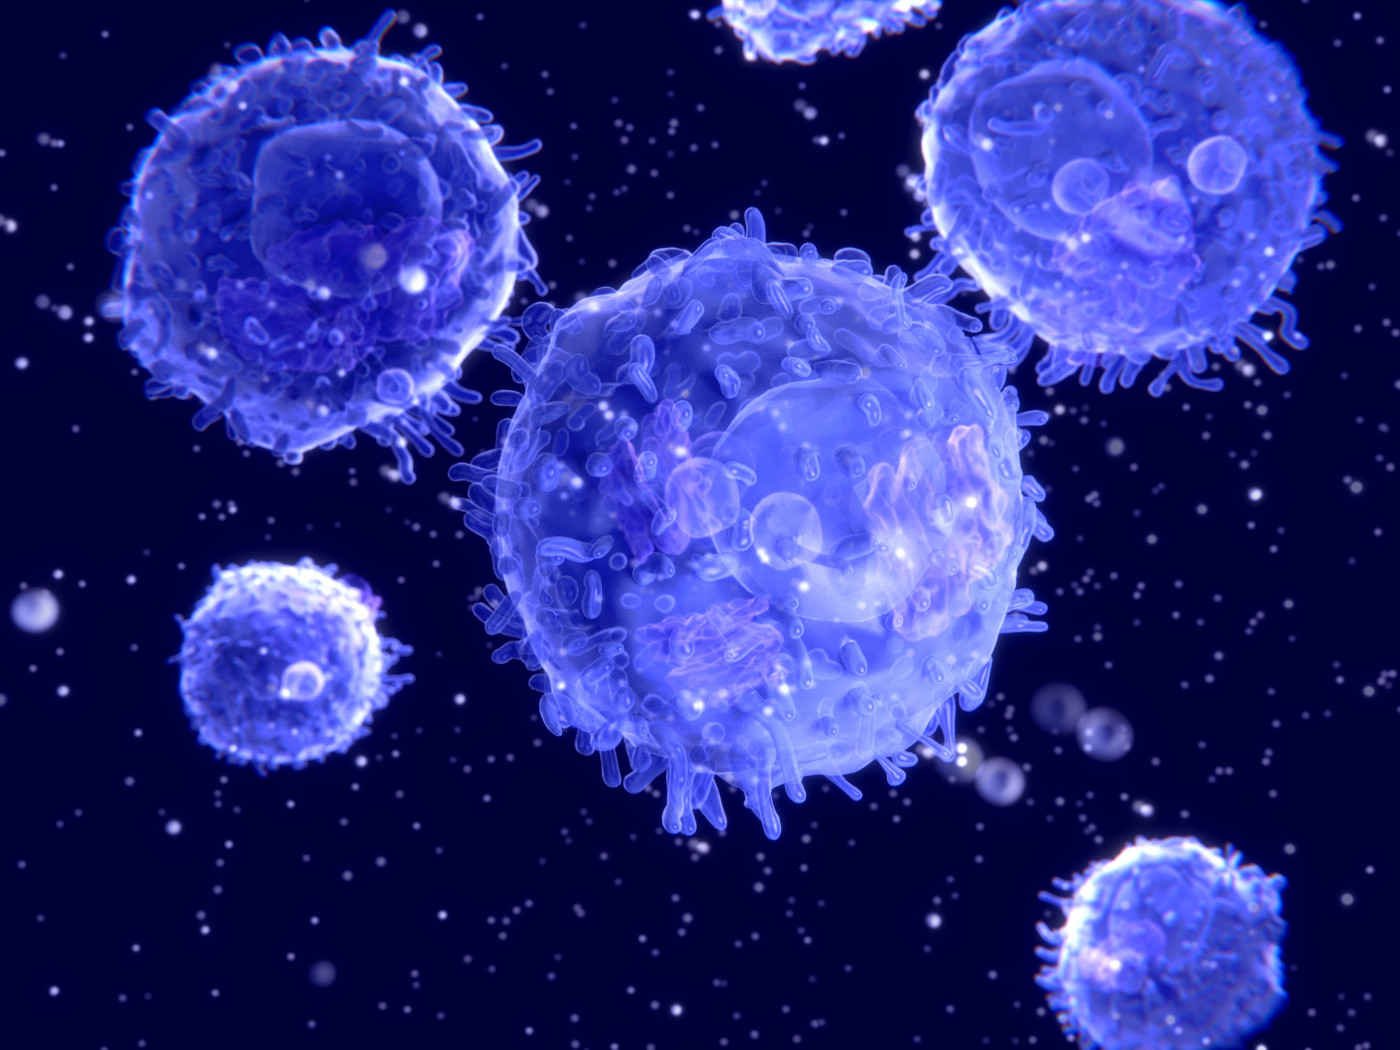 Mavenclad and immune cells